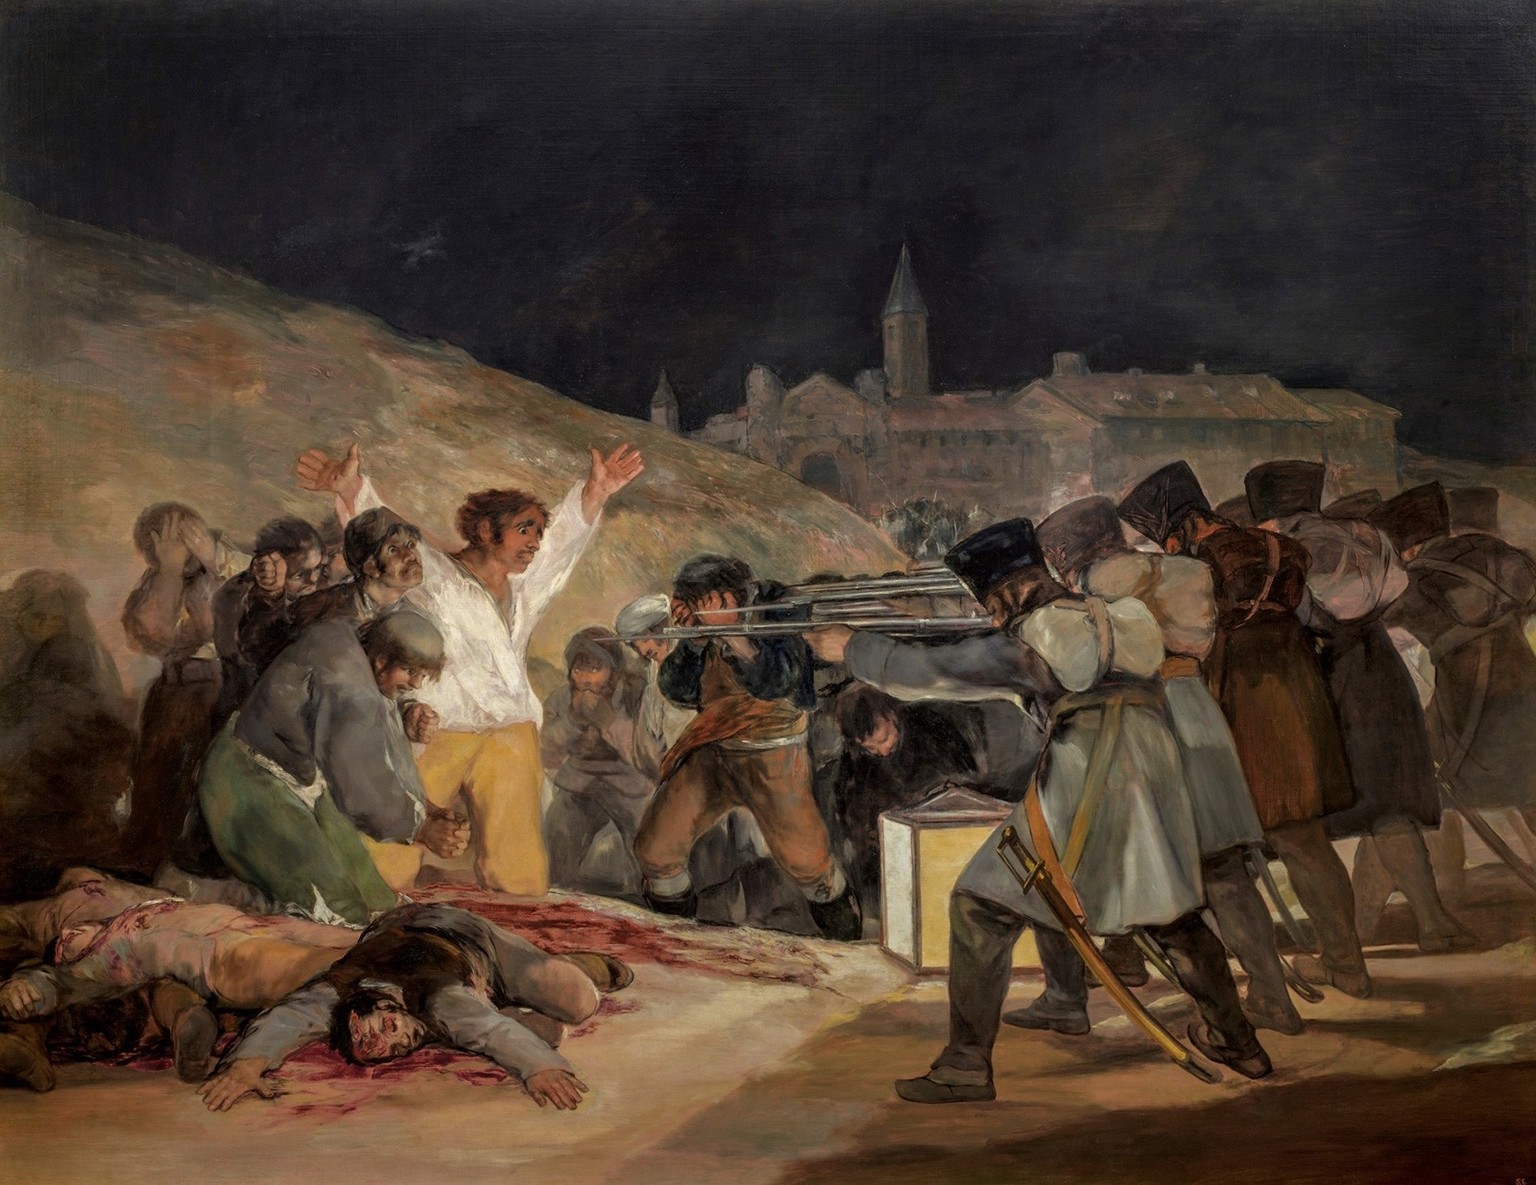 Gros plan sur les horreurs de la guerre: Tres de mayo, de Francisco de Goya, 1814.
https://www.museodelprado.es/coleccion/obra-de-arte/wd/5e177409-2993-4240-97fb-847a02c6496c